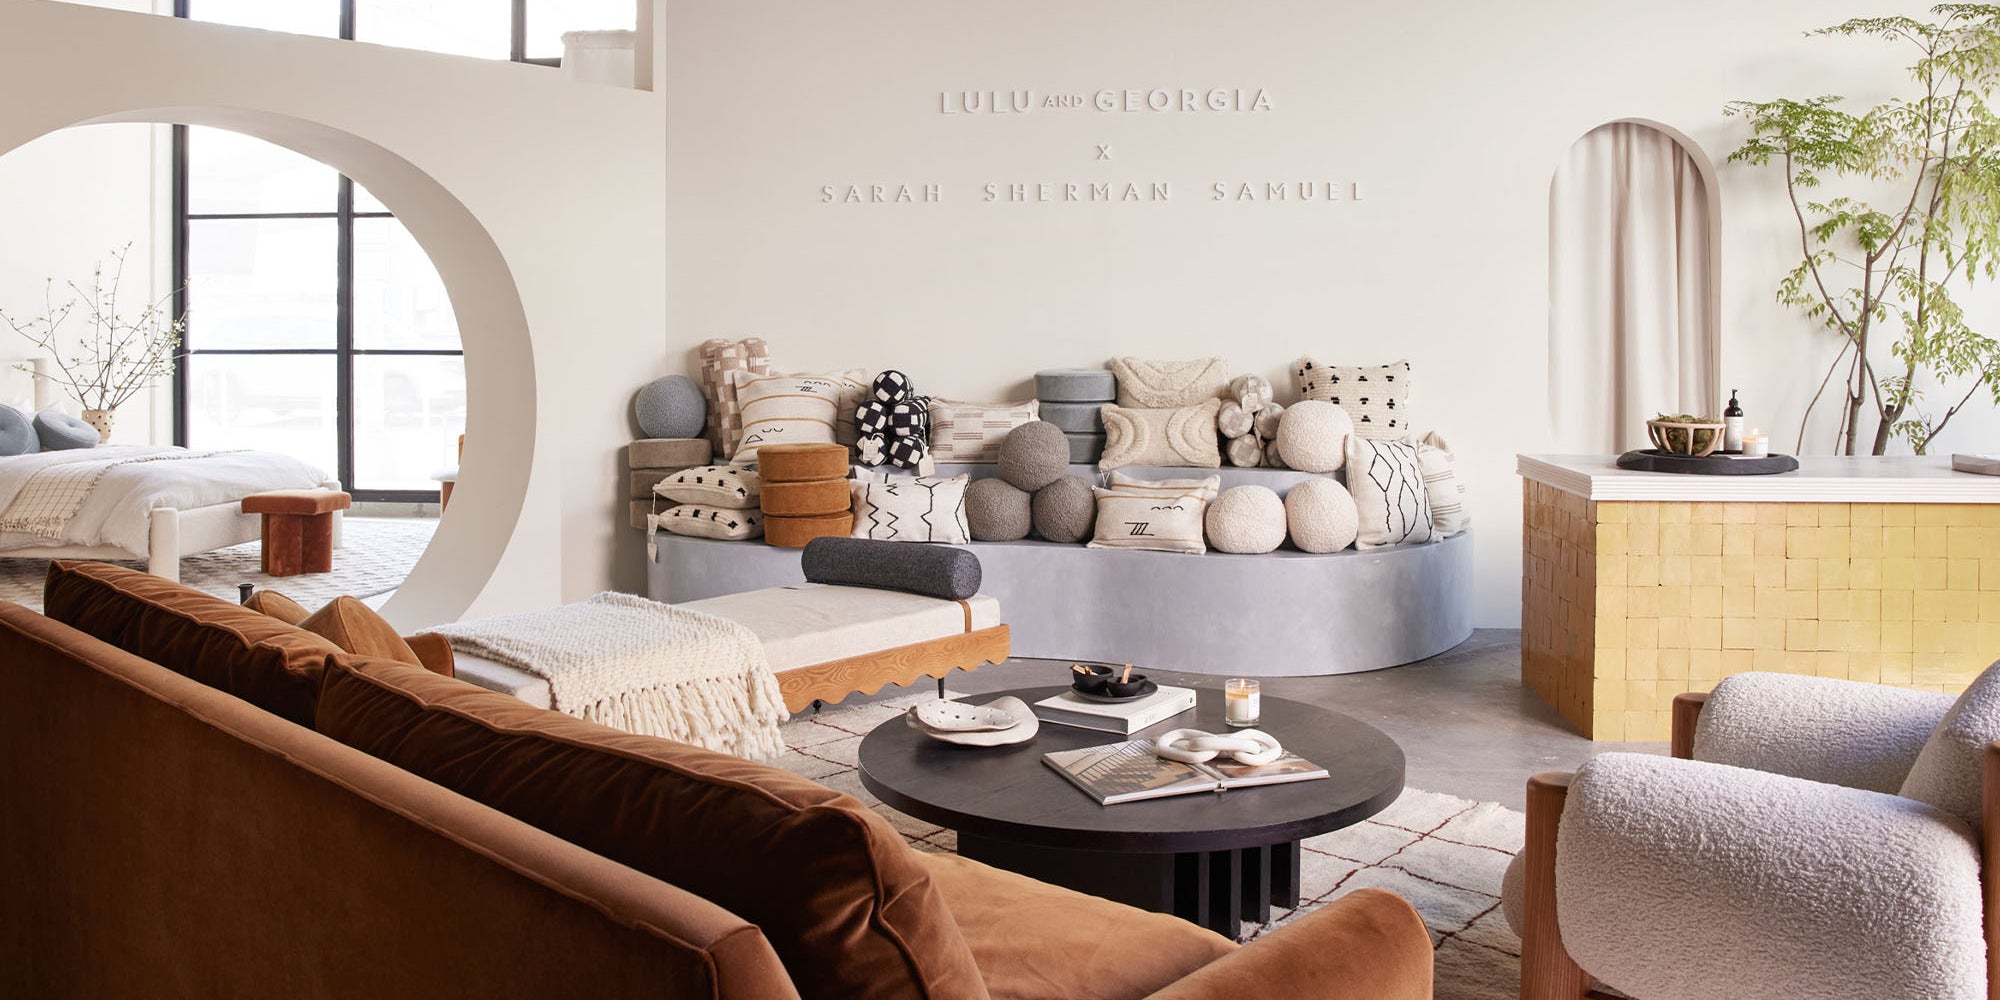 House of Design: the Sarah Sherman Samuel Pop-Up Showroom